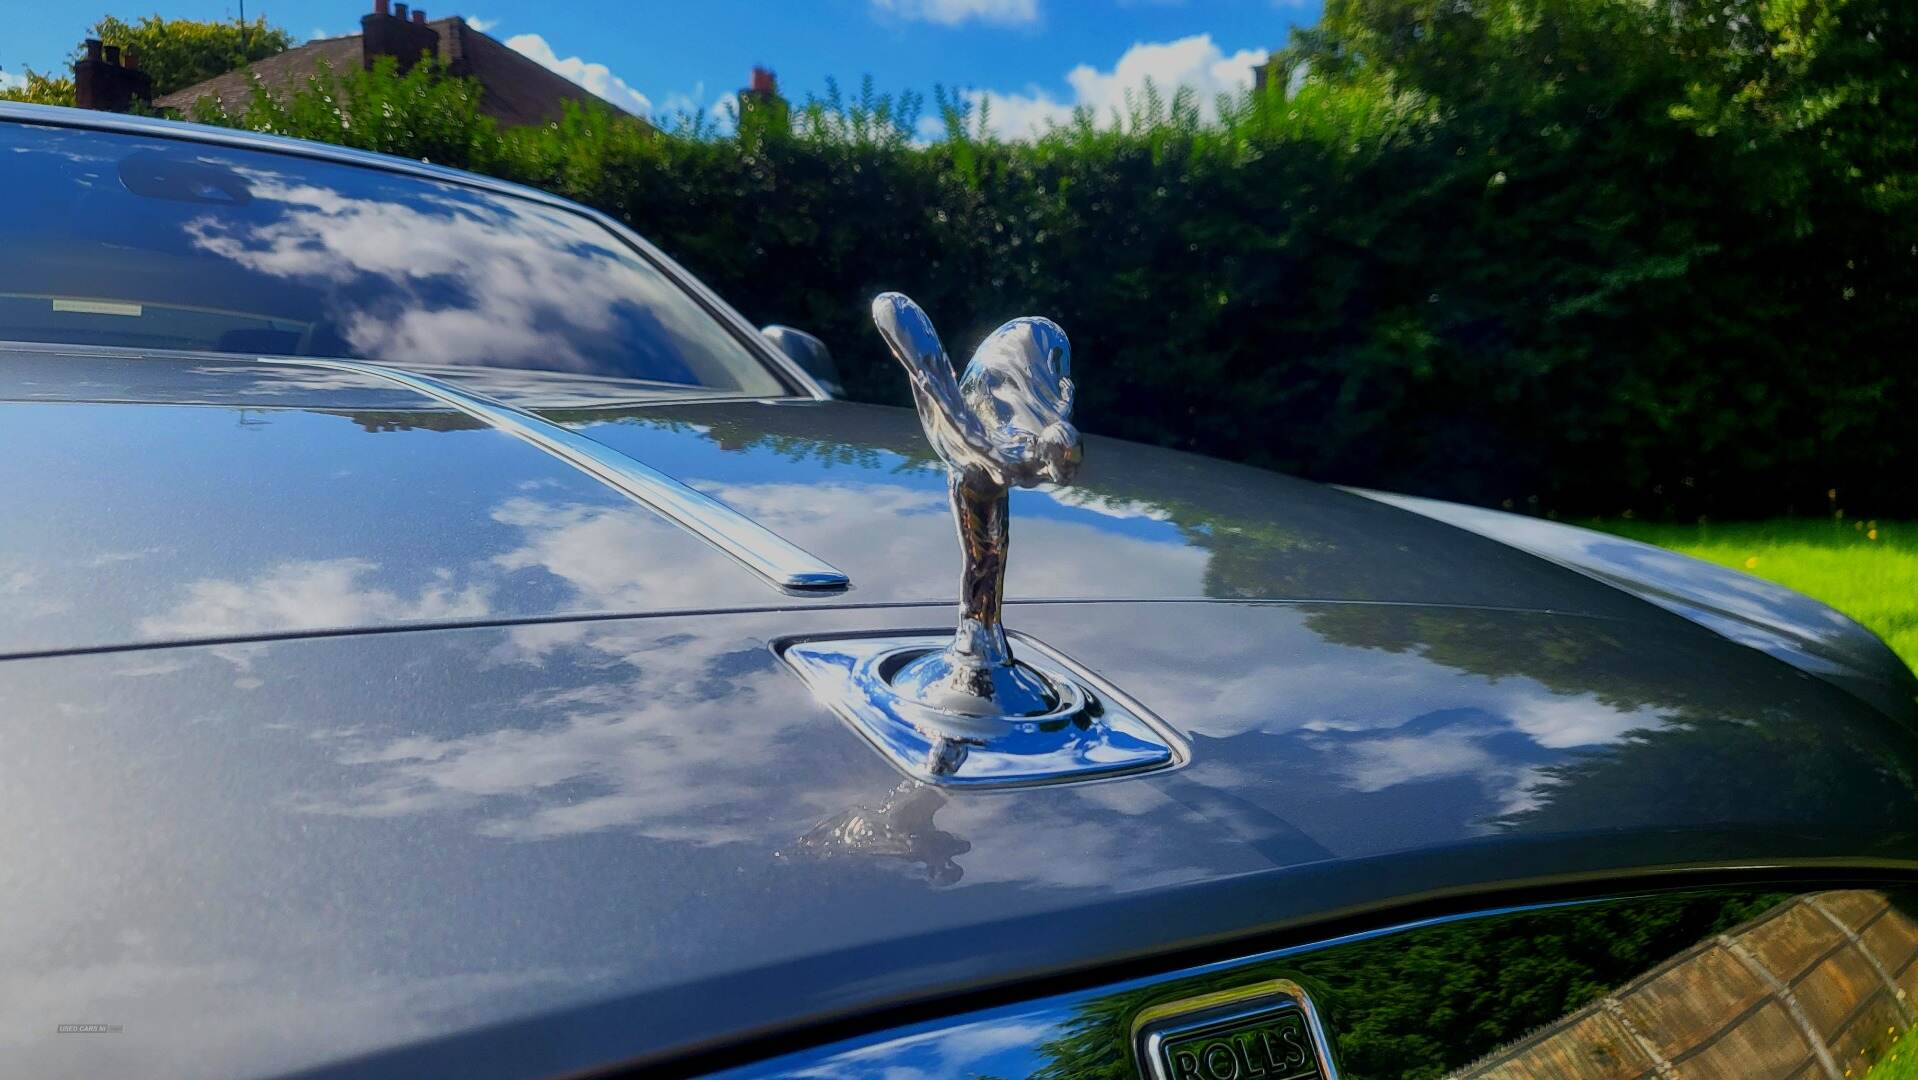 Rolls-Royce Ghost SALOON in Antrim